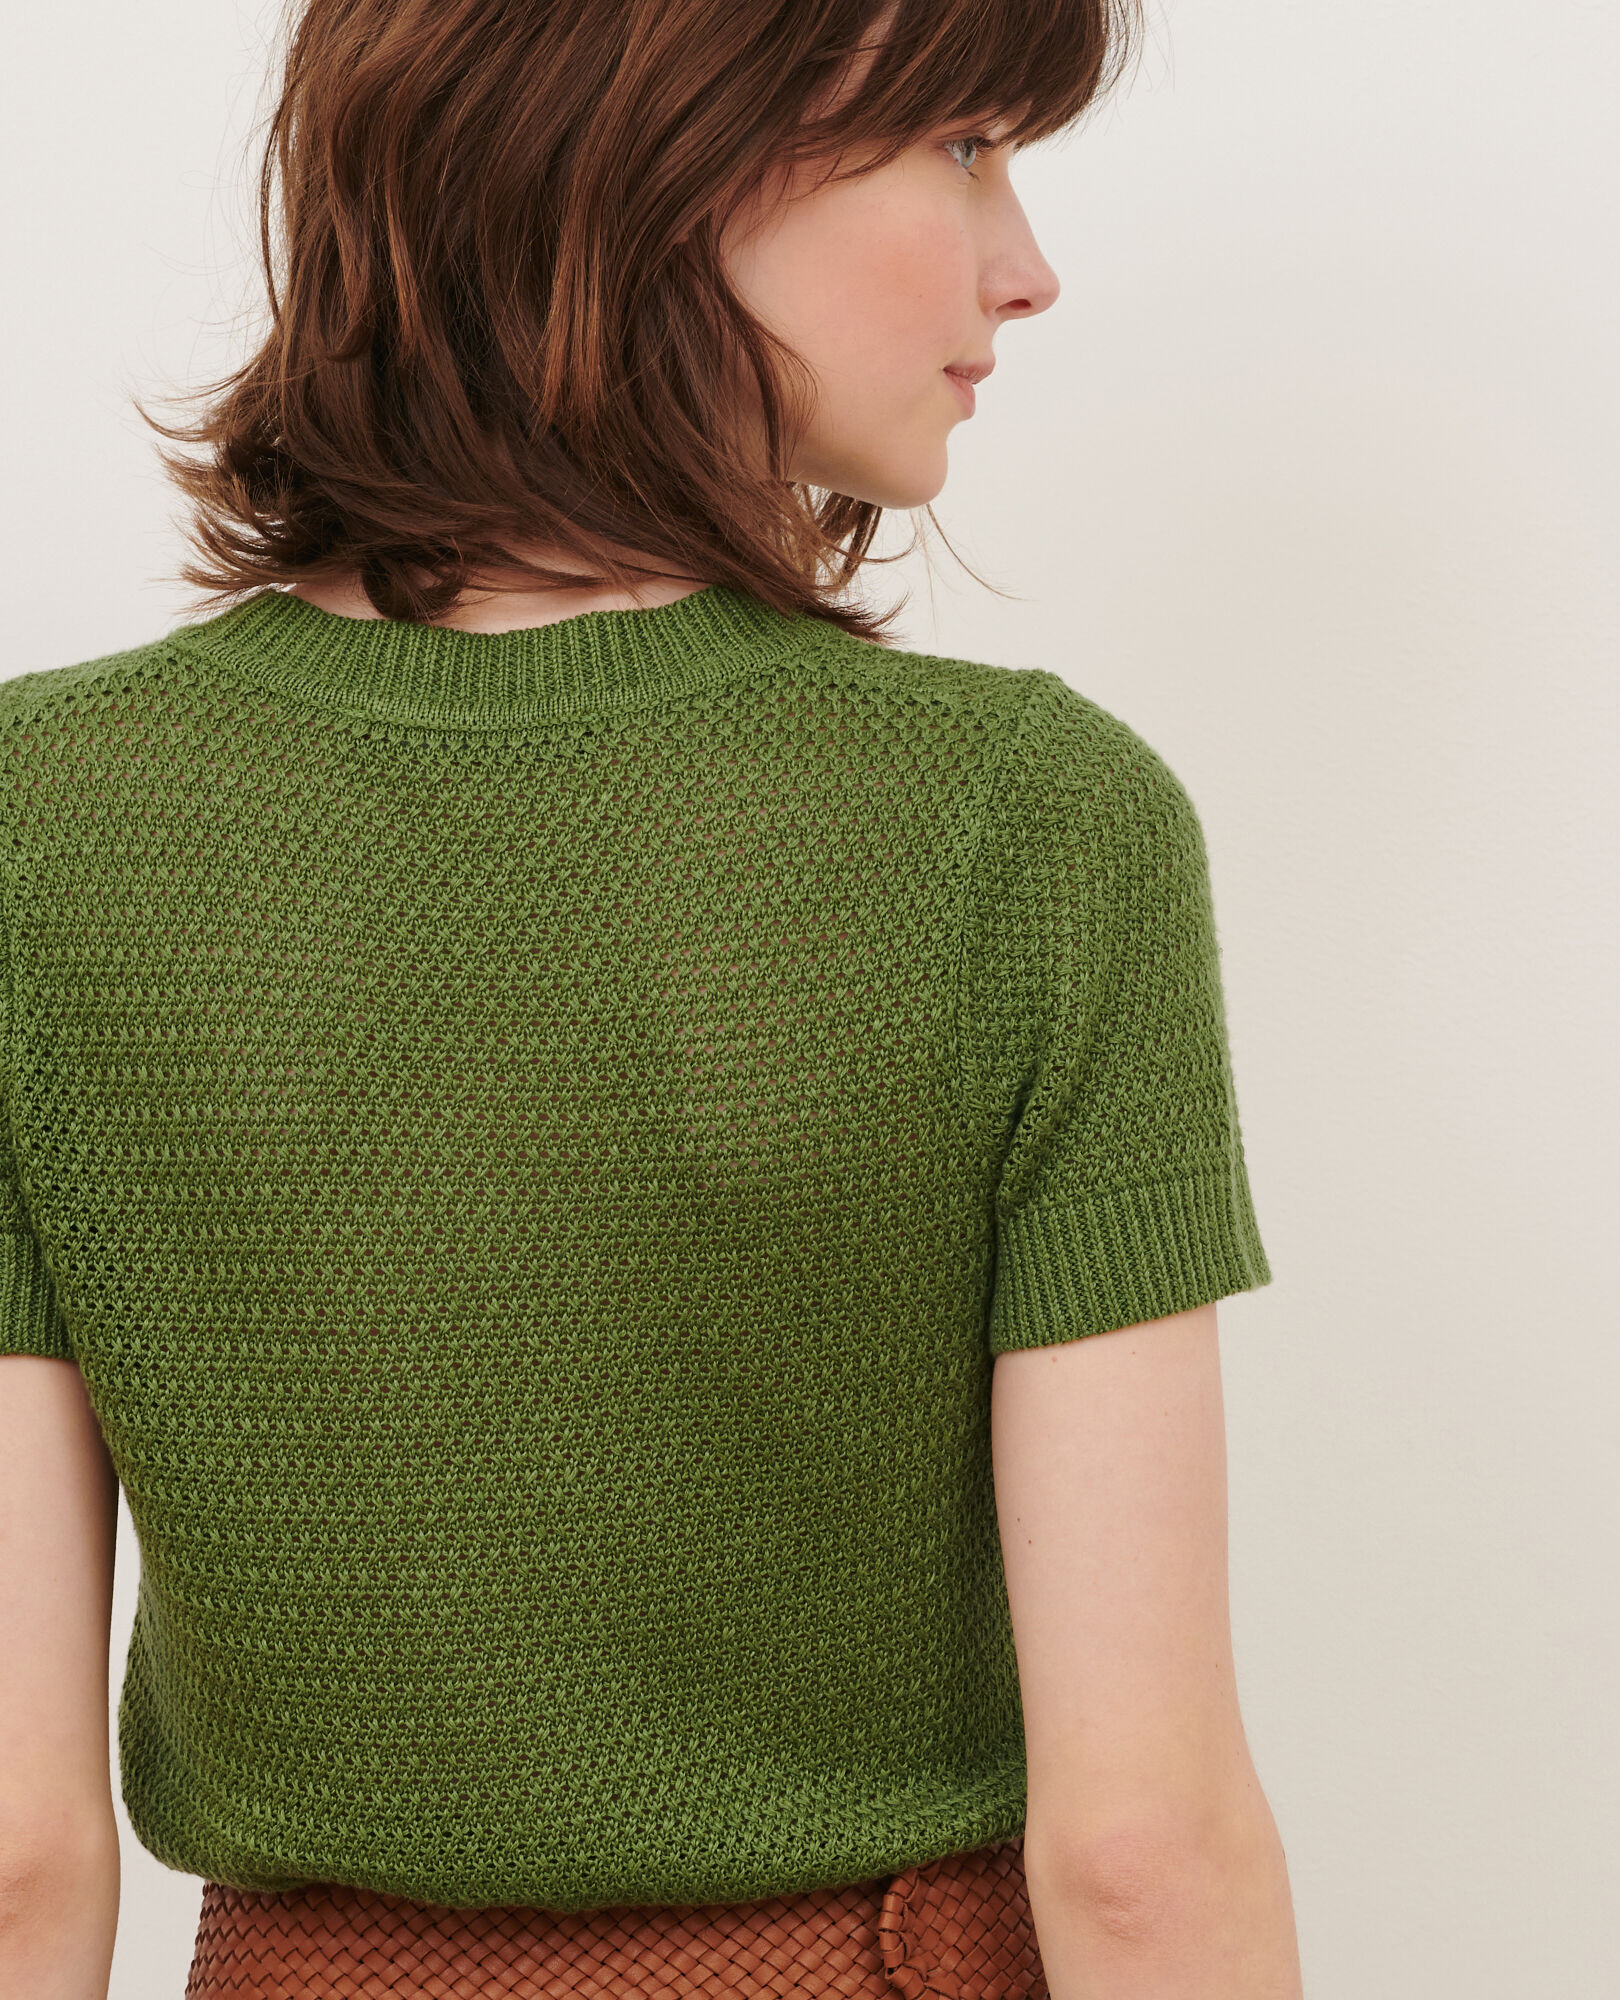 Jersey de lino con manga corta 52 green 2sju430f04